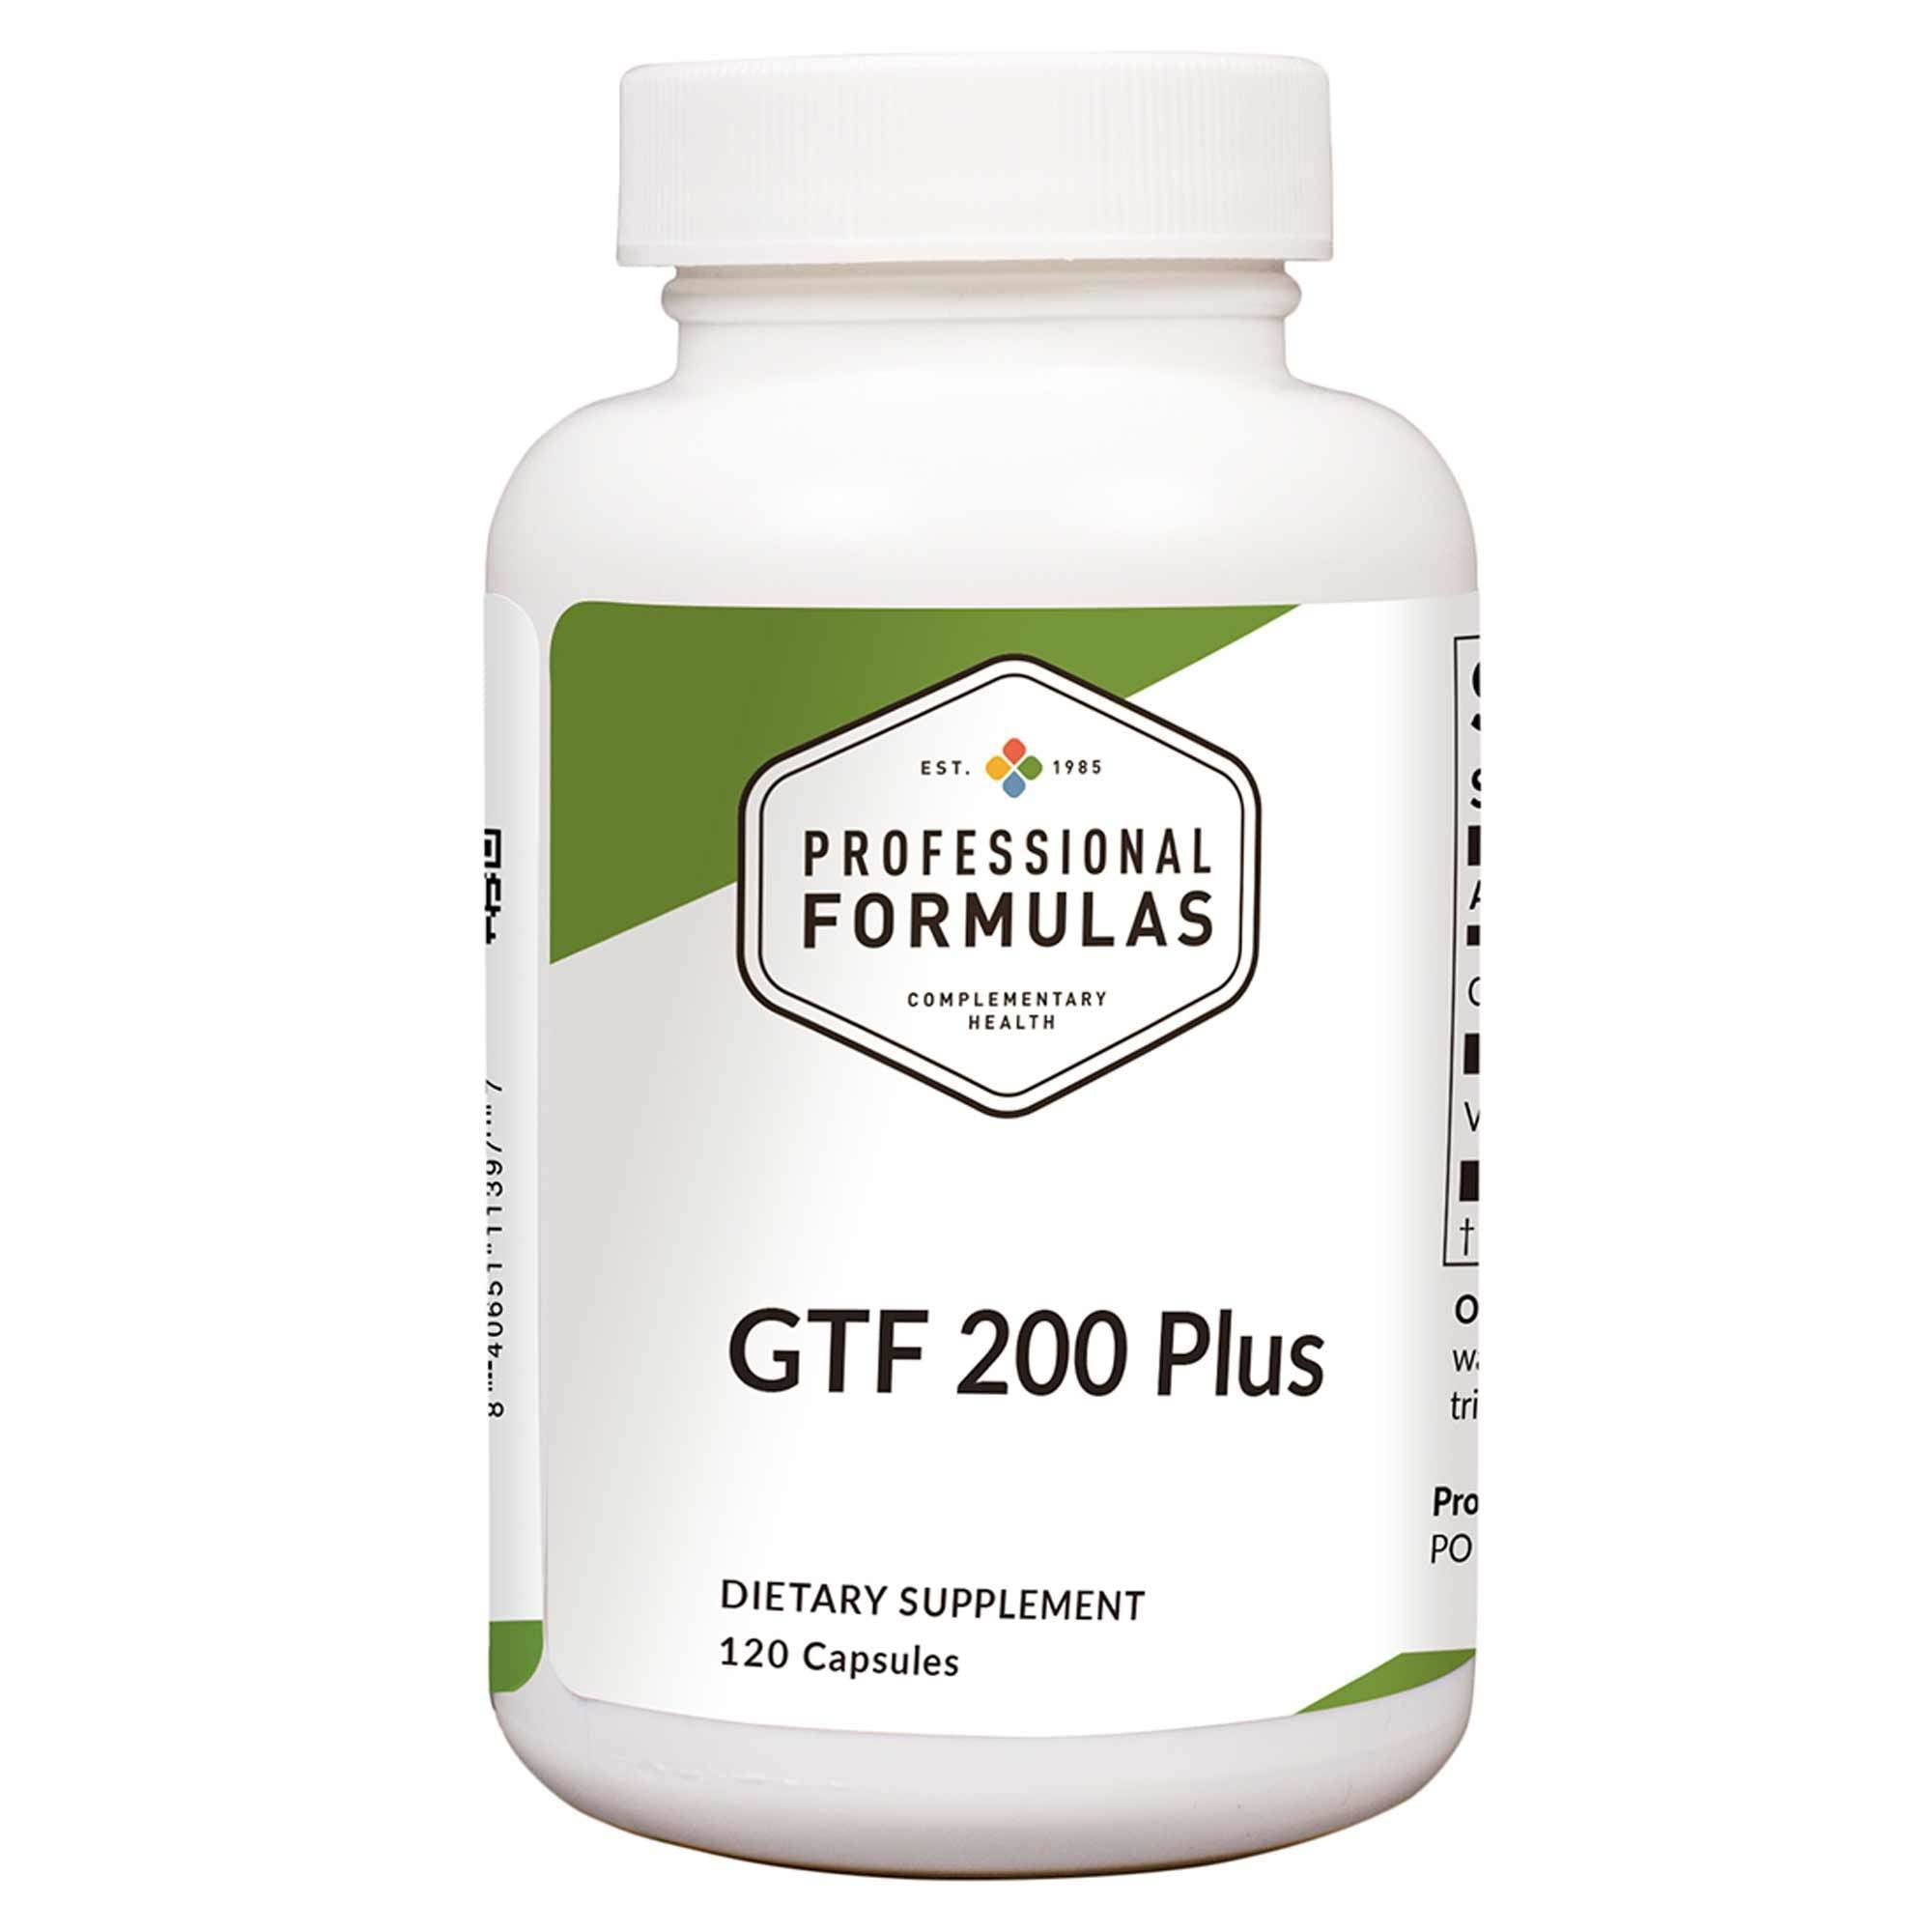 Professional Formulas GTF 200 Plus 120 Capsules - 2 Pack